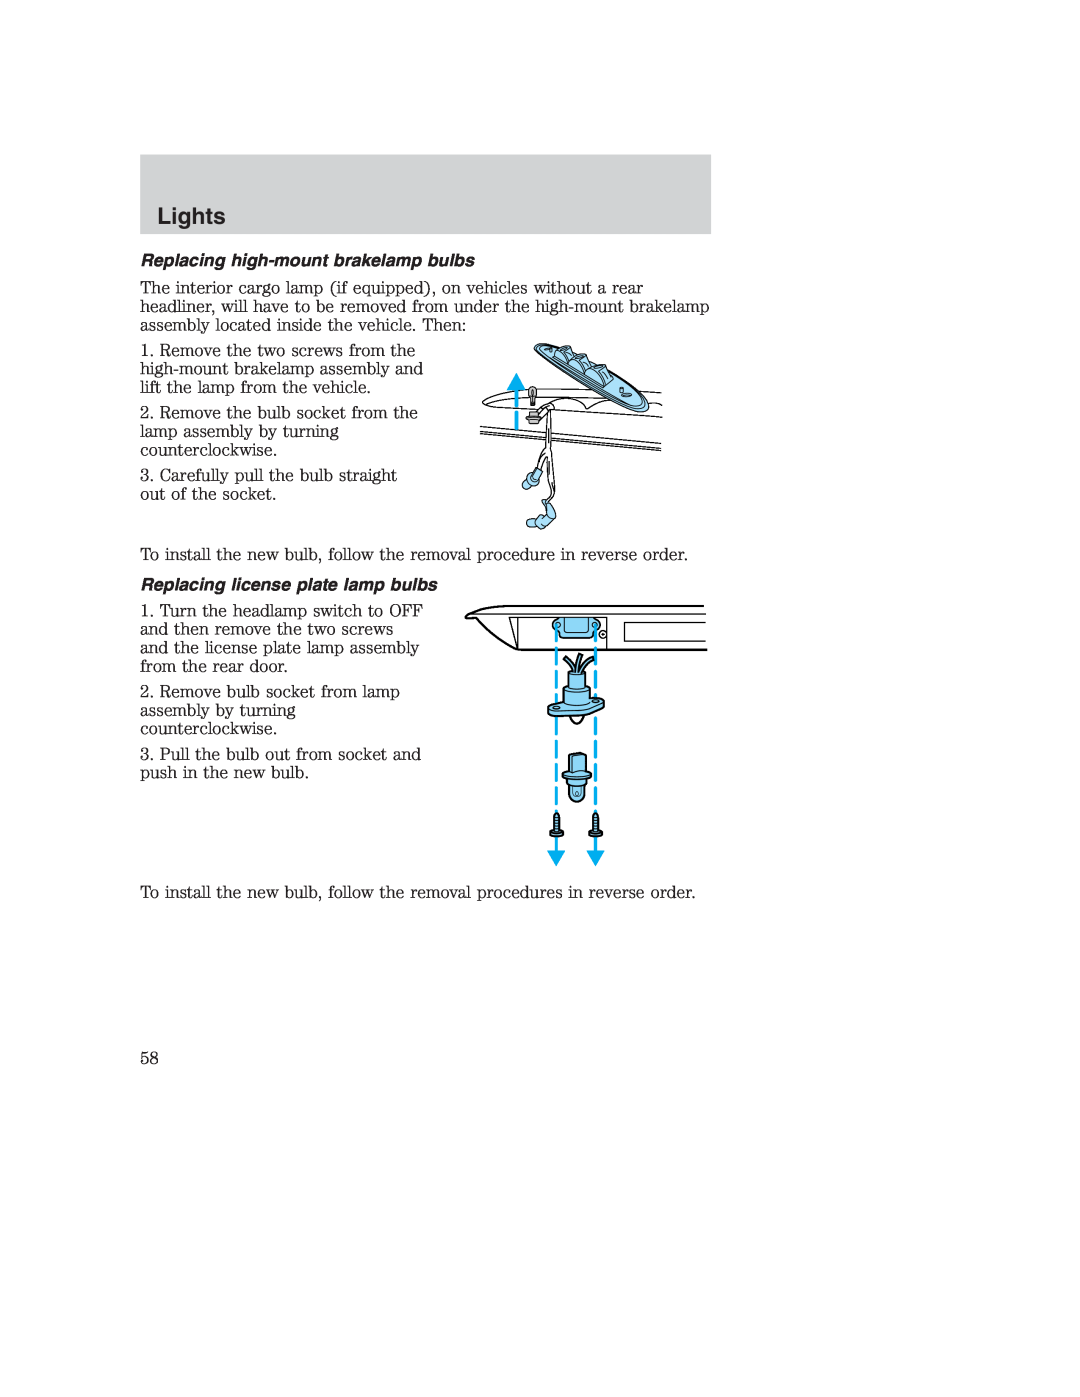 Ford AM/FM stereo manual Replacing high-mount brakelamp bulbs, Replacing license plate lamp bulbs, Lights 